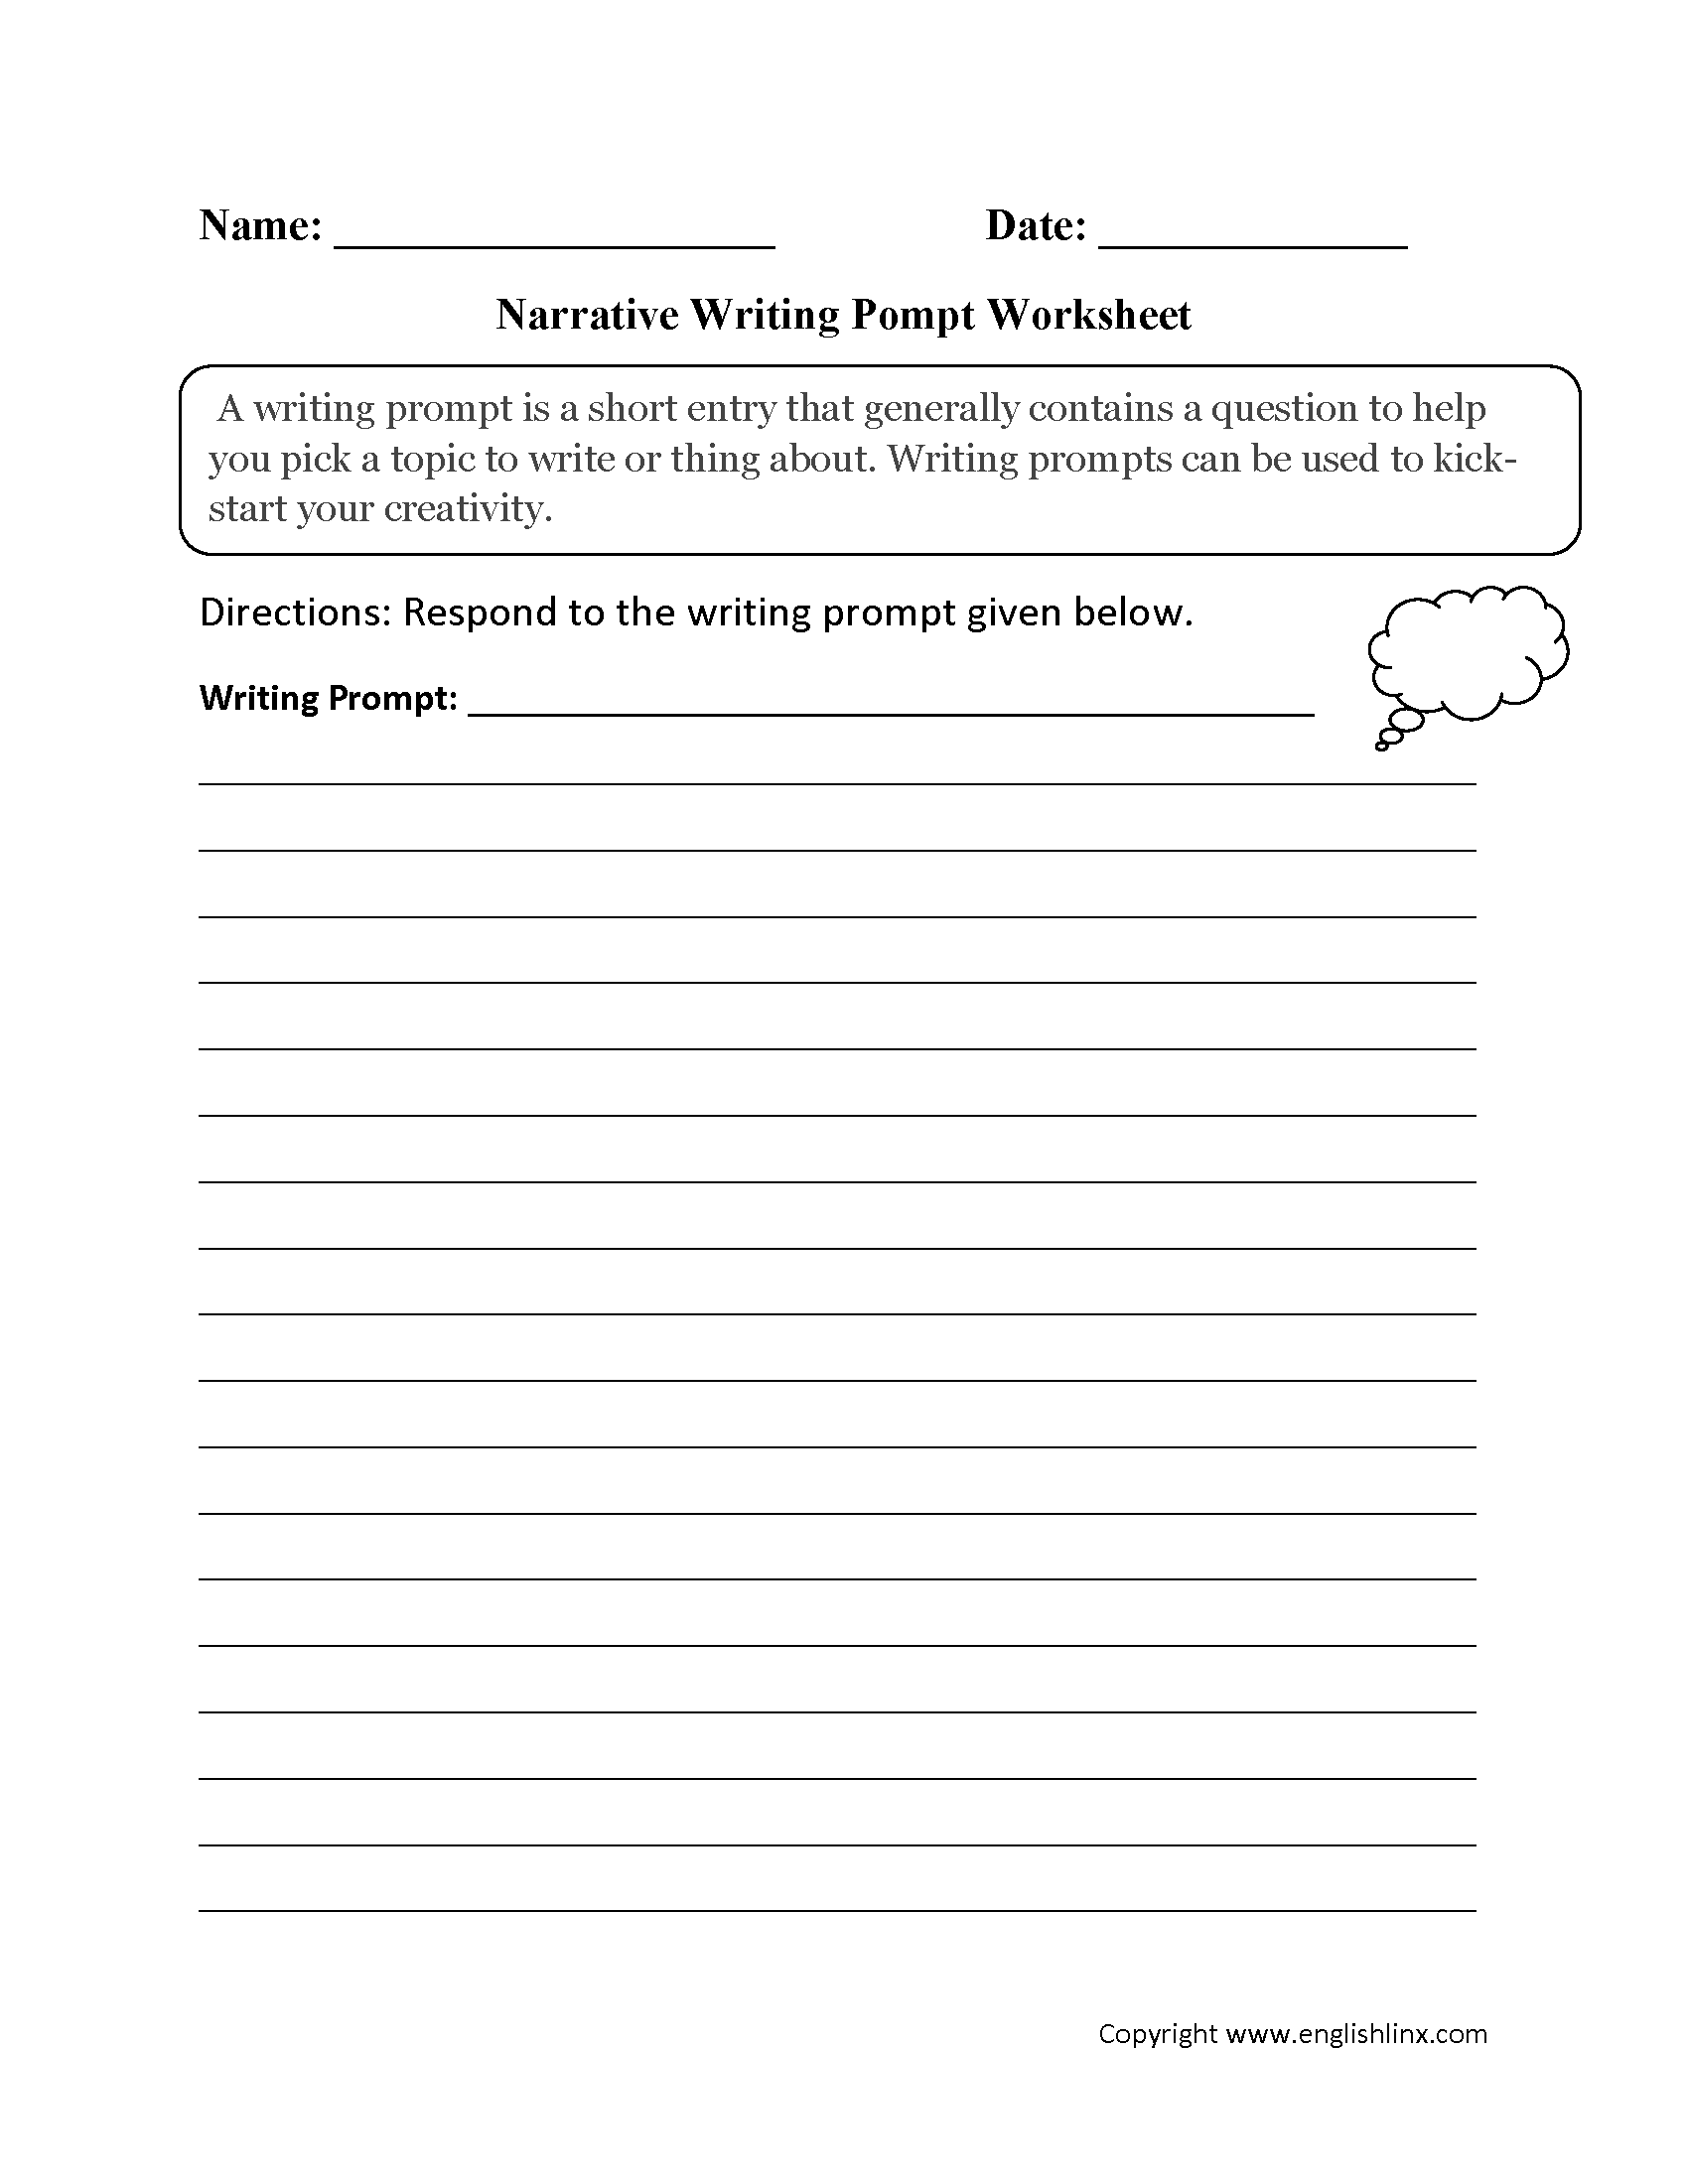 Narrative Writing Prompt Worksheet